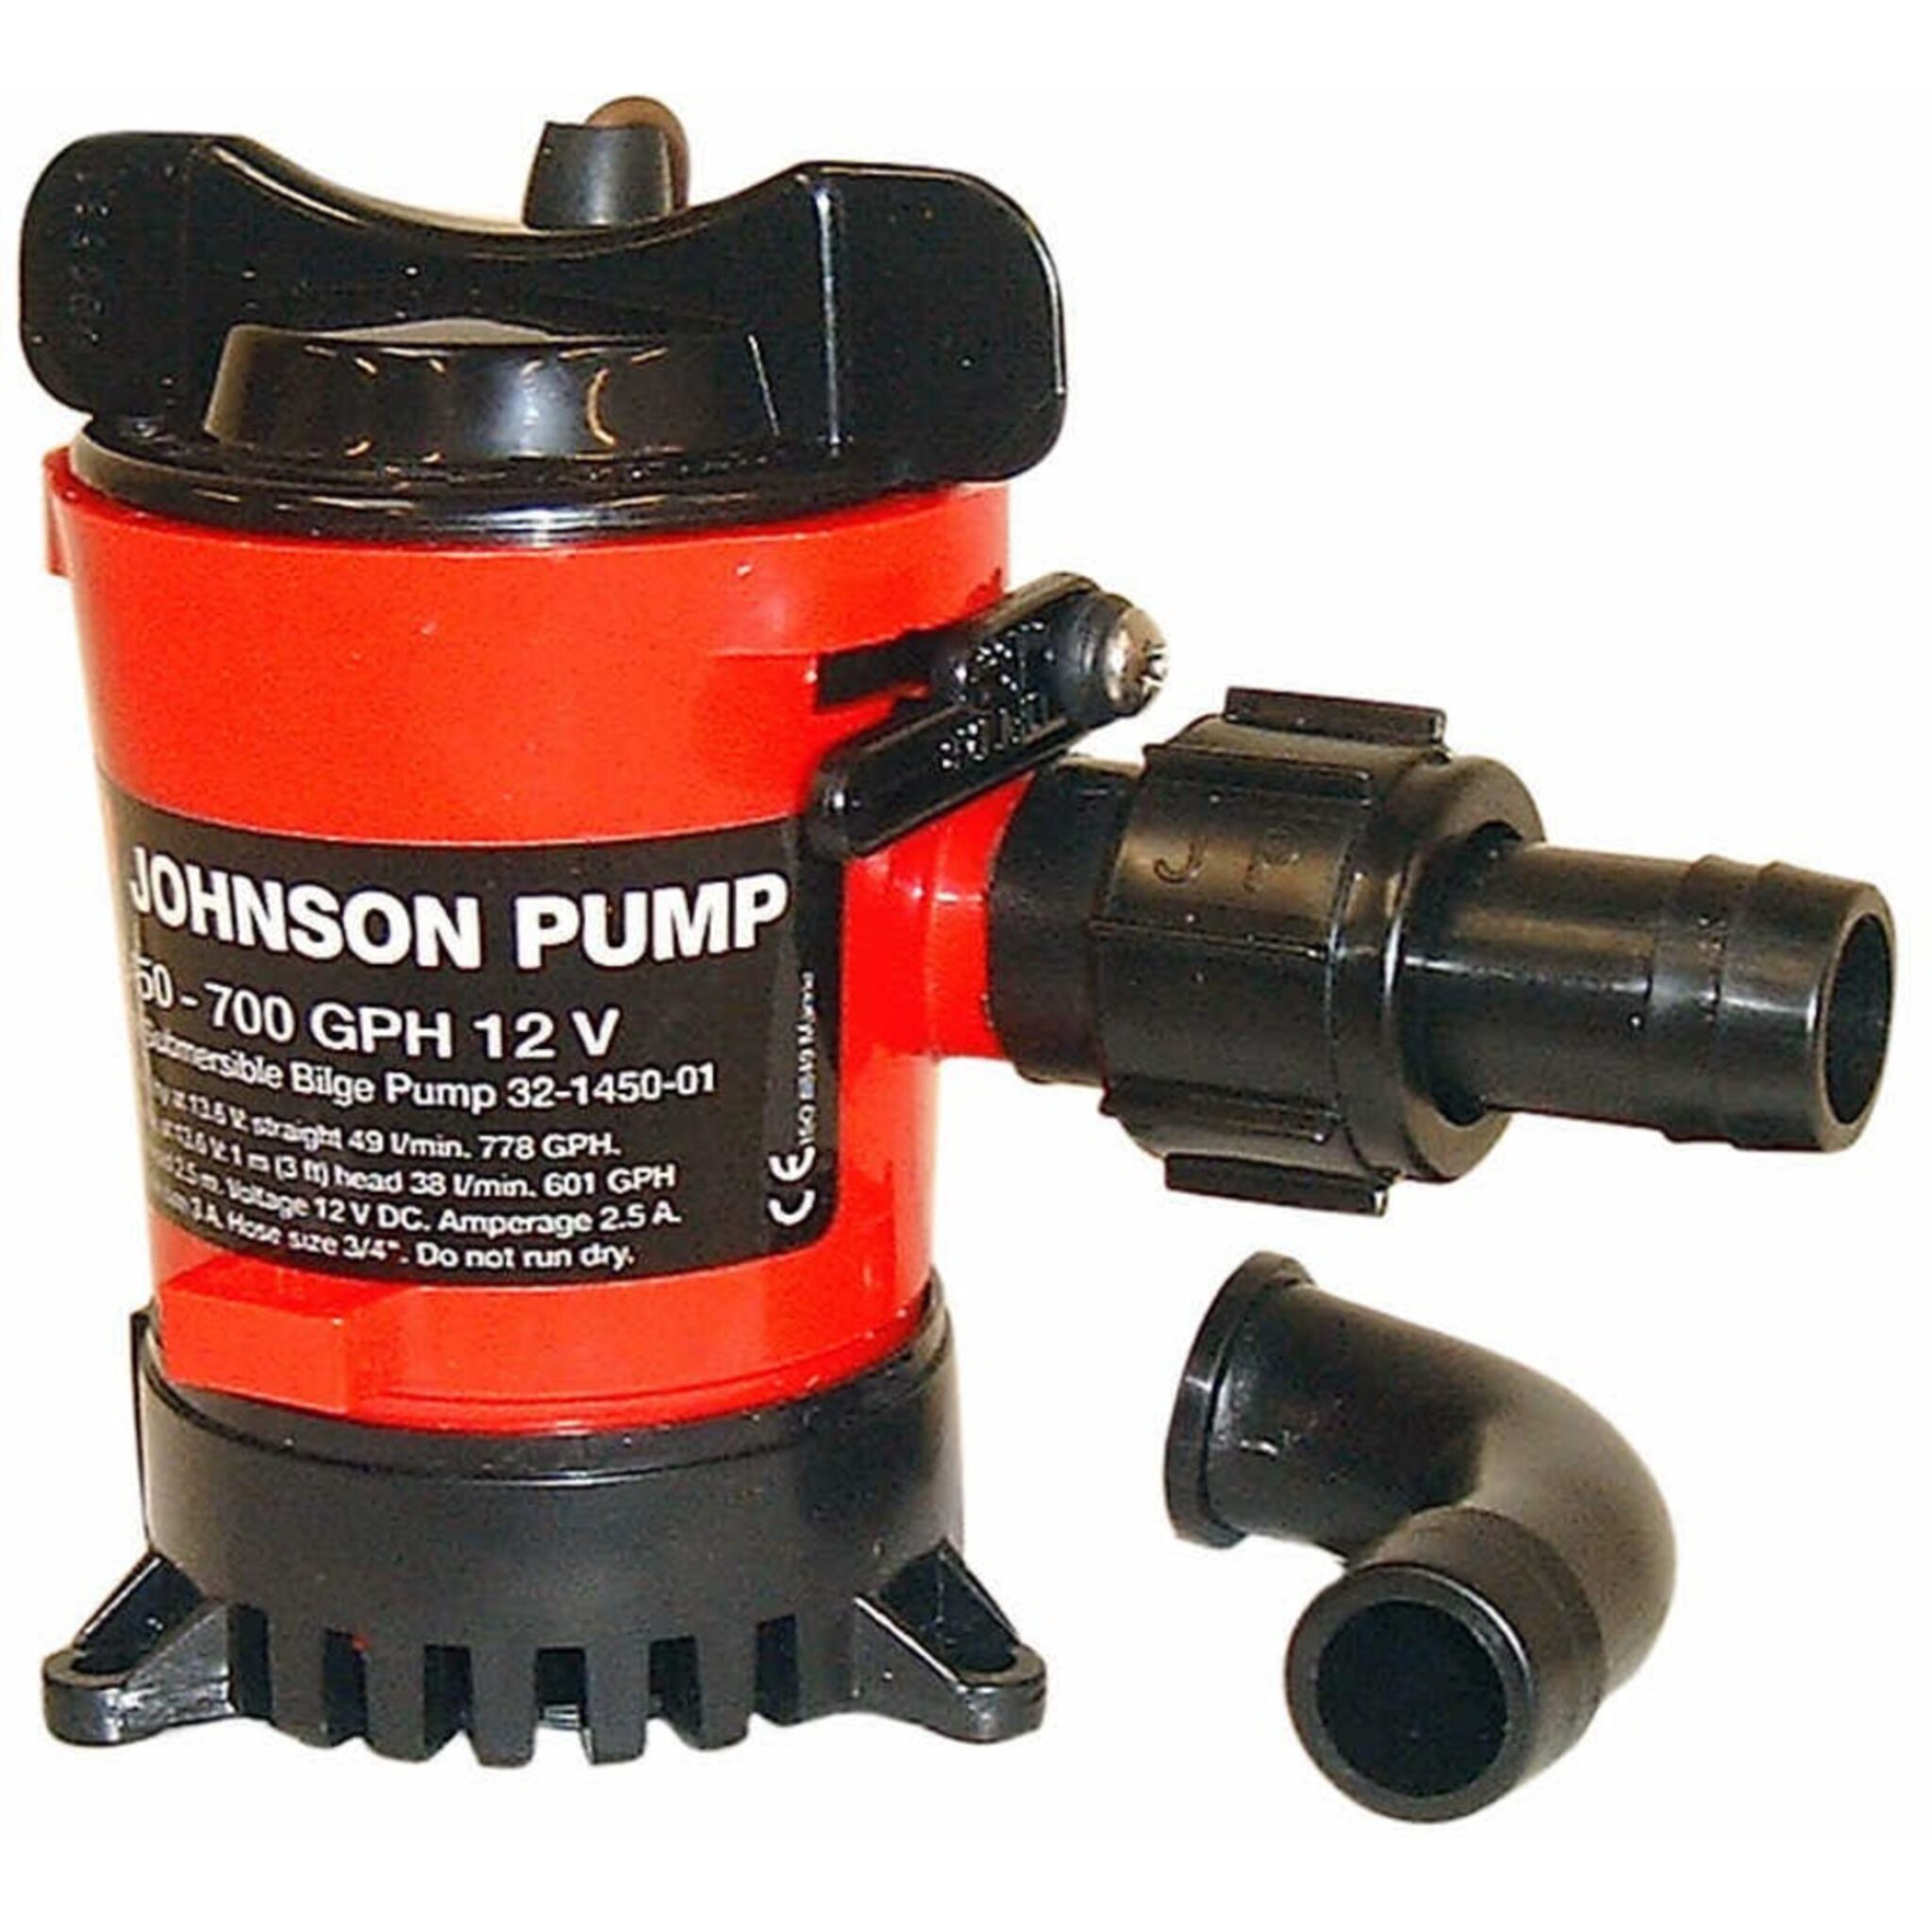 JOHNSON Submersible Bilge Pump L750